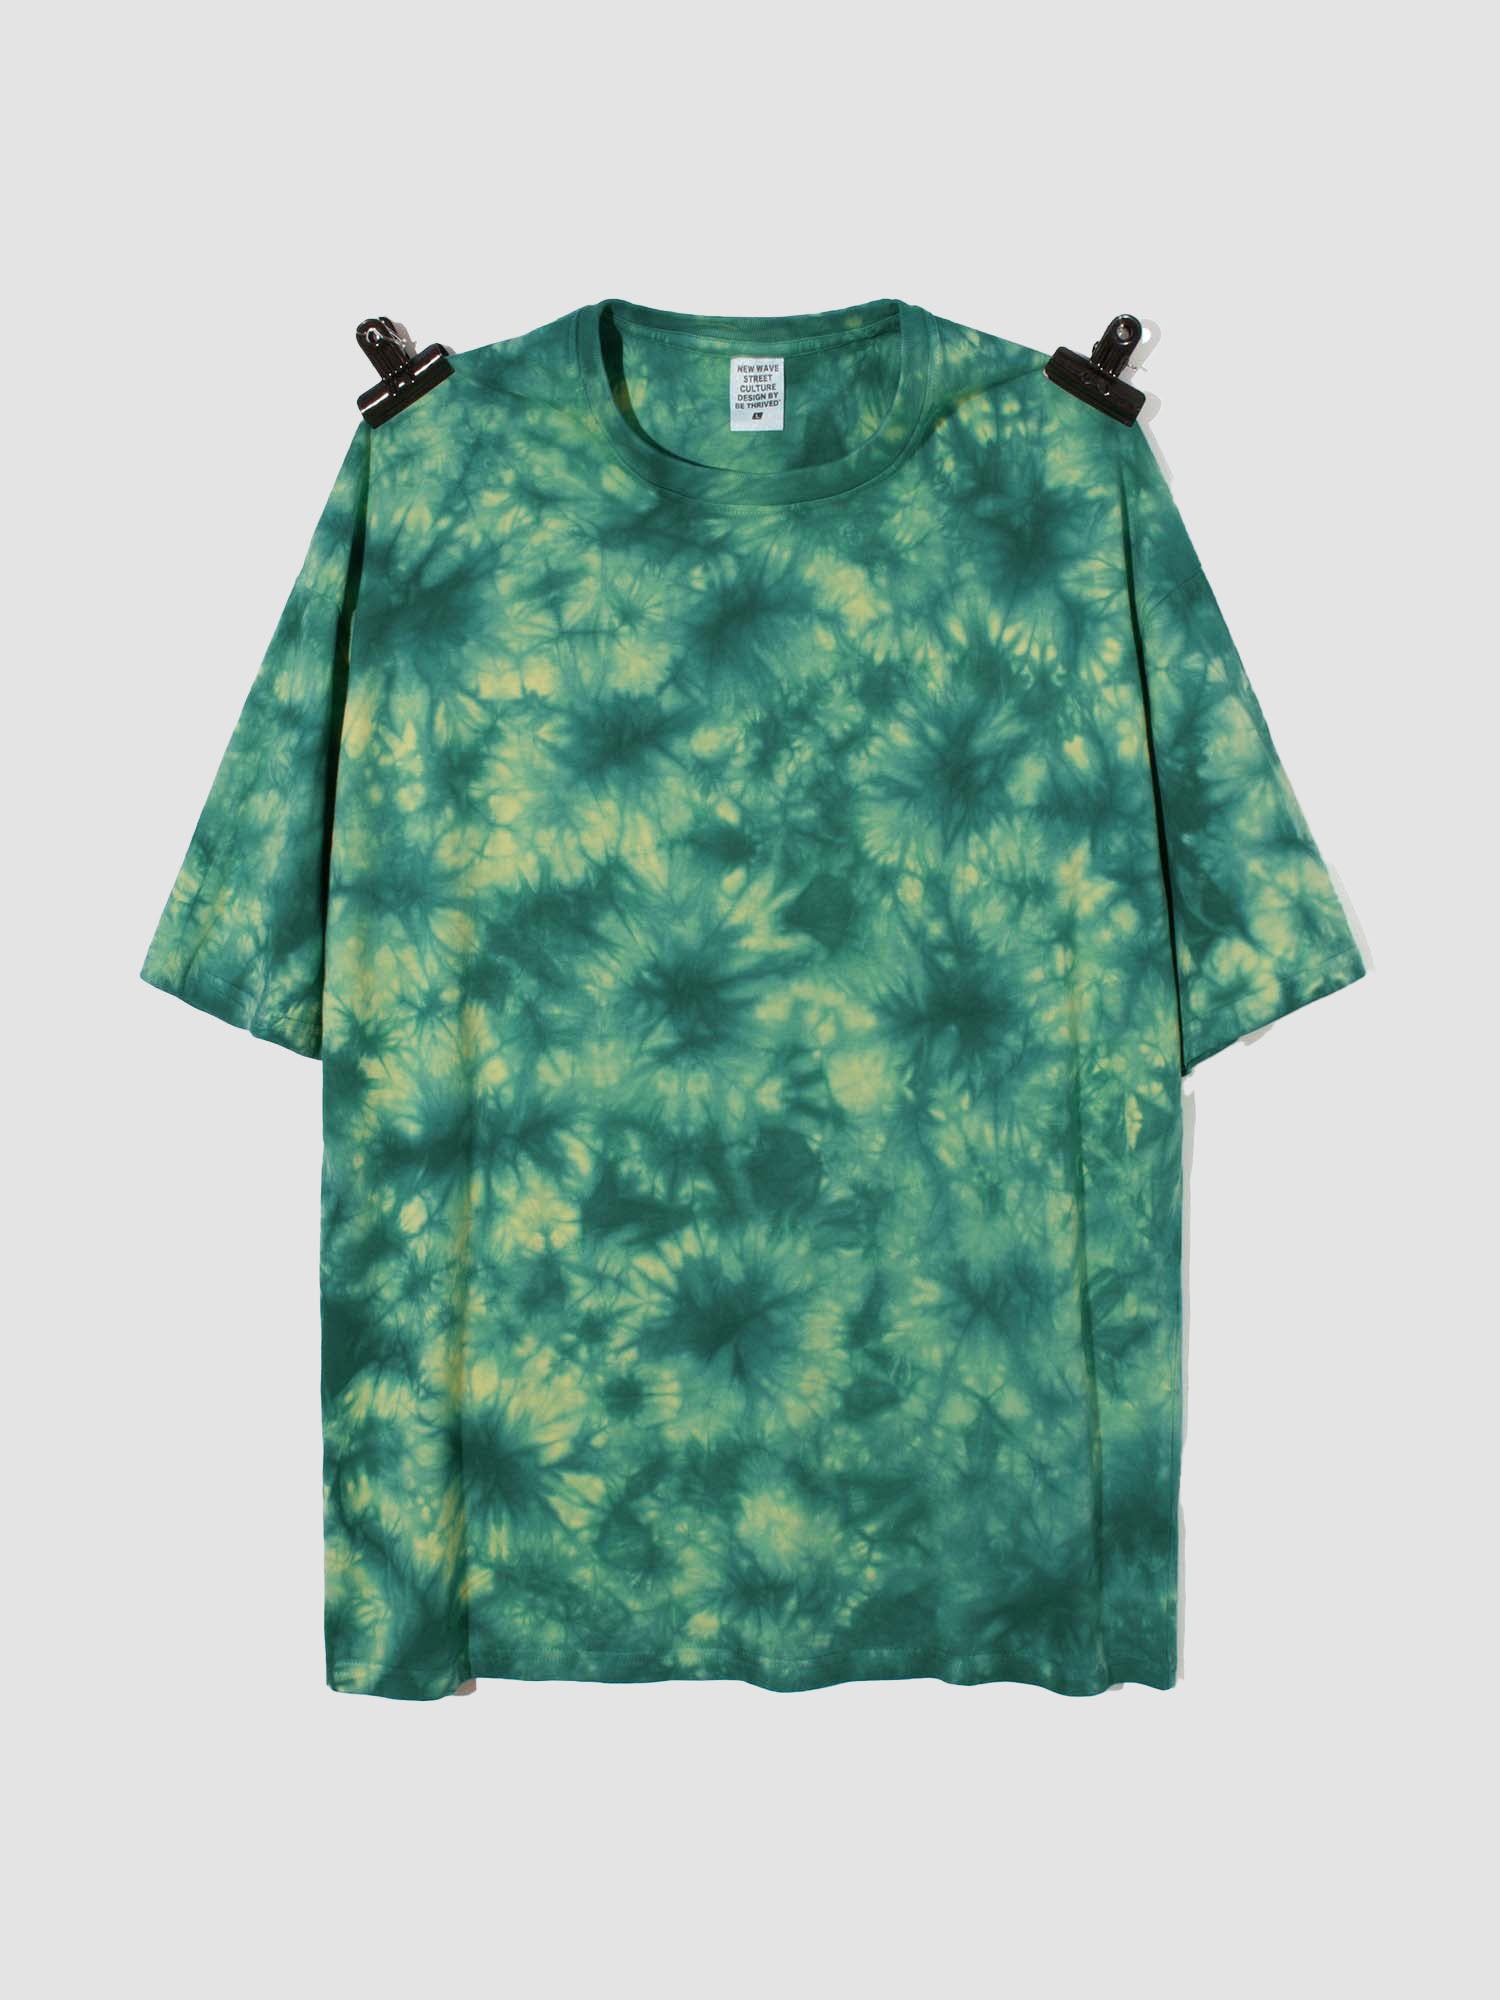 JUSTNOTAG Green forest Iridescent 100% Cotton Short Sleeve Tee - Tie Dye